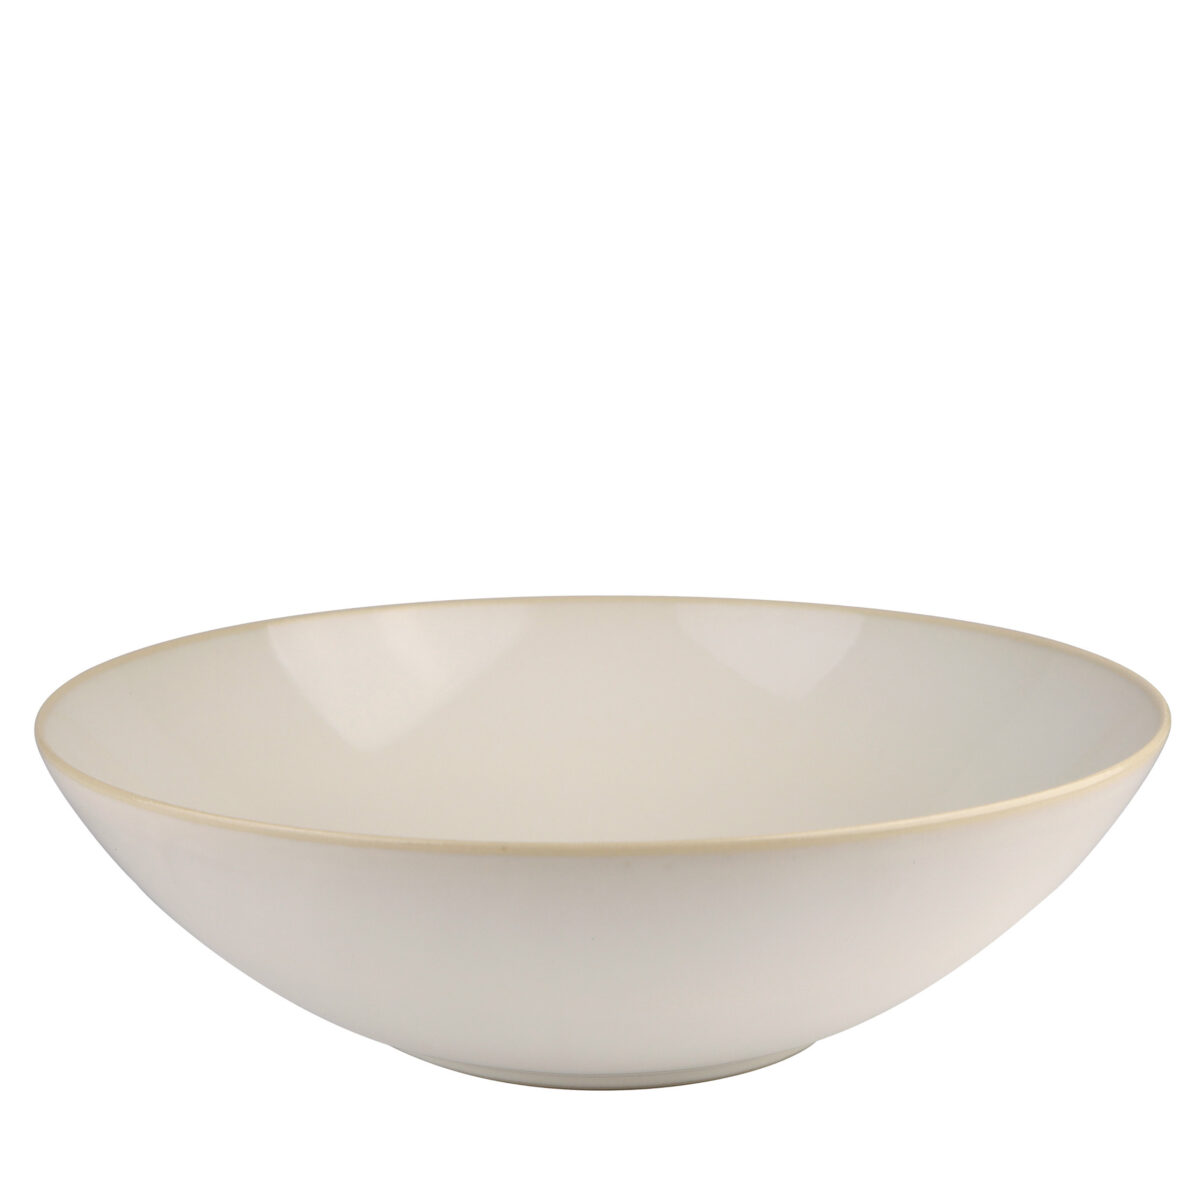 Clássico collection - vitreous stoneware - ID7 salad bowl 24 - Nacar